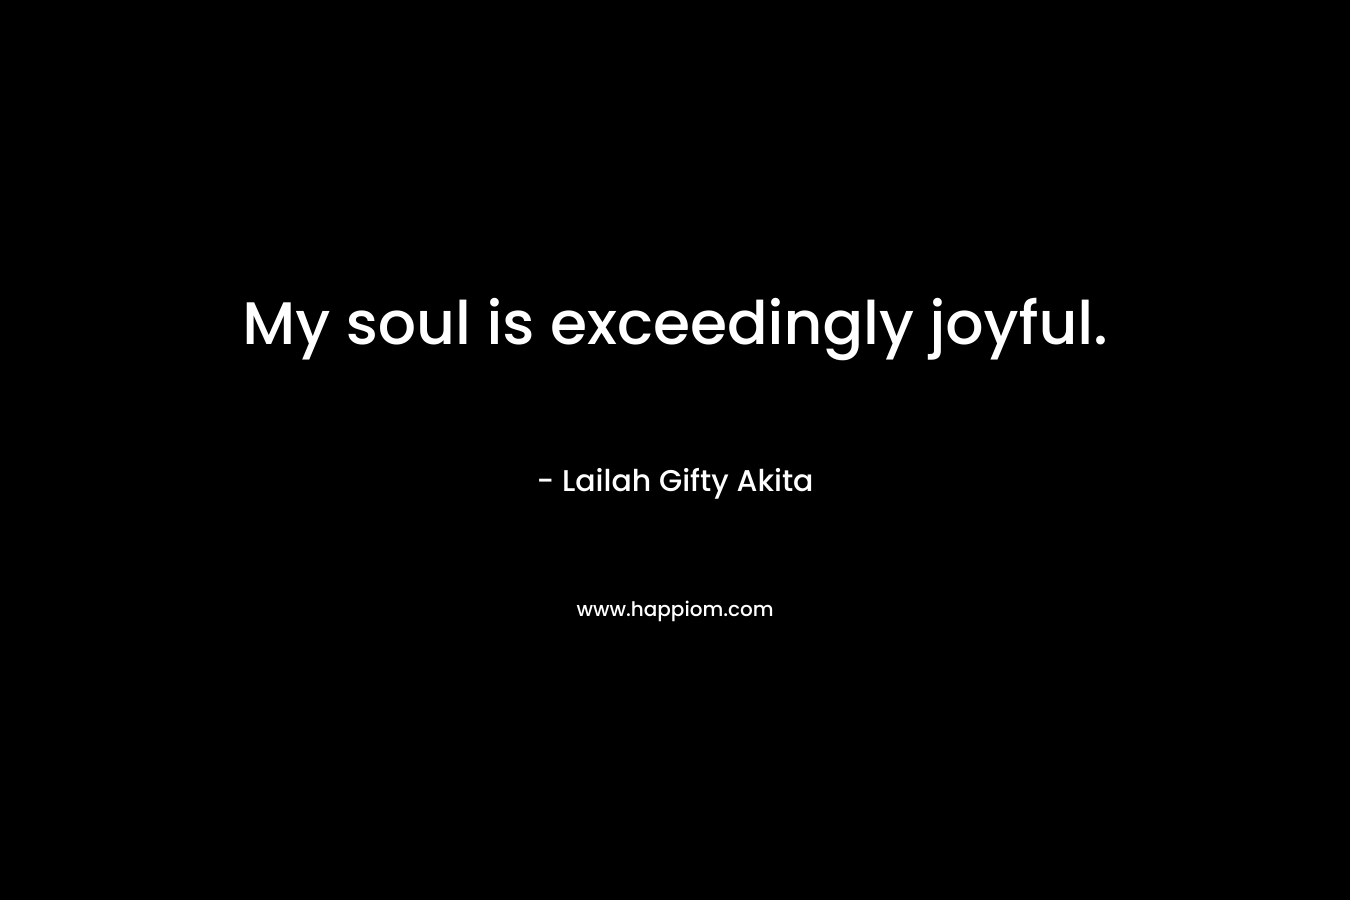 My soul is exceedingly joyful.